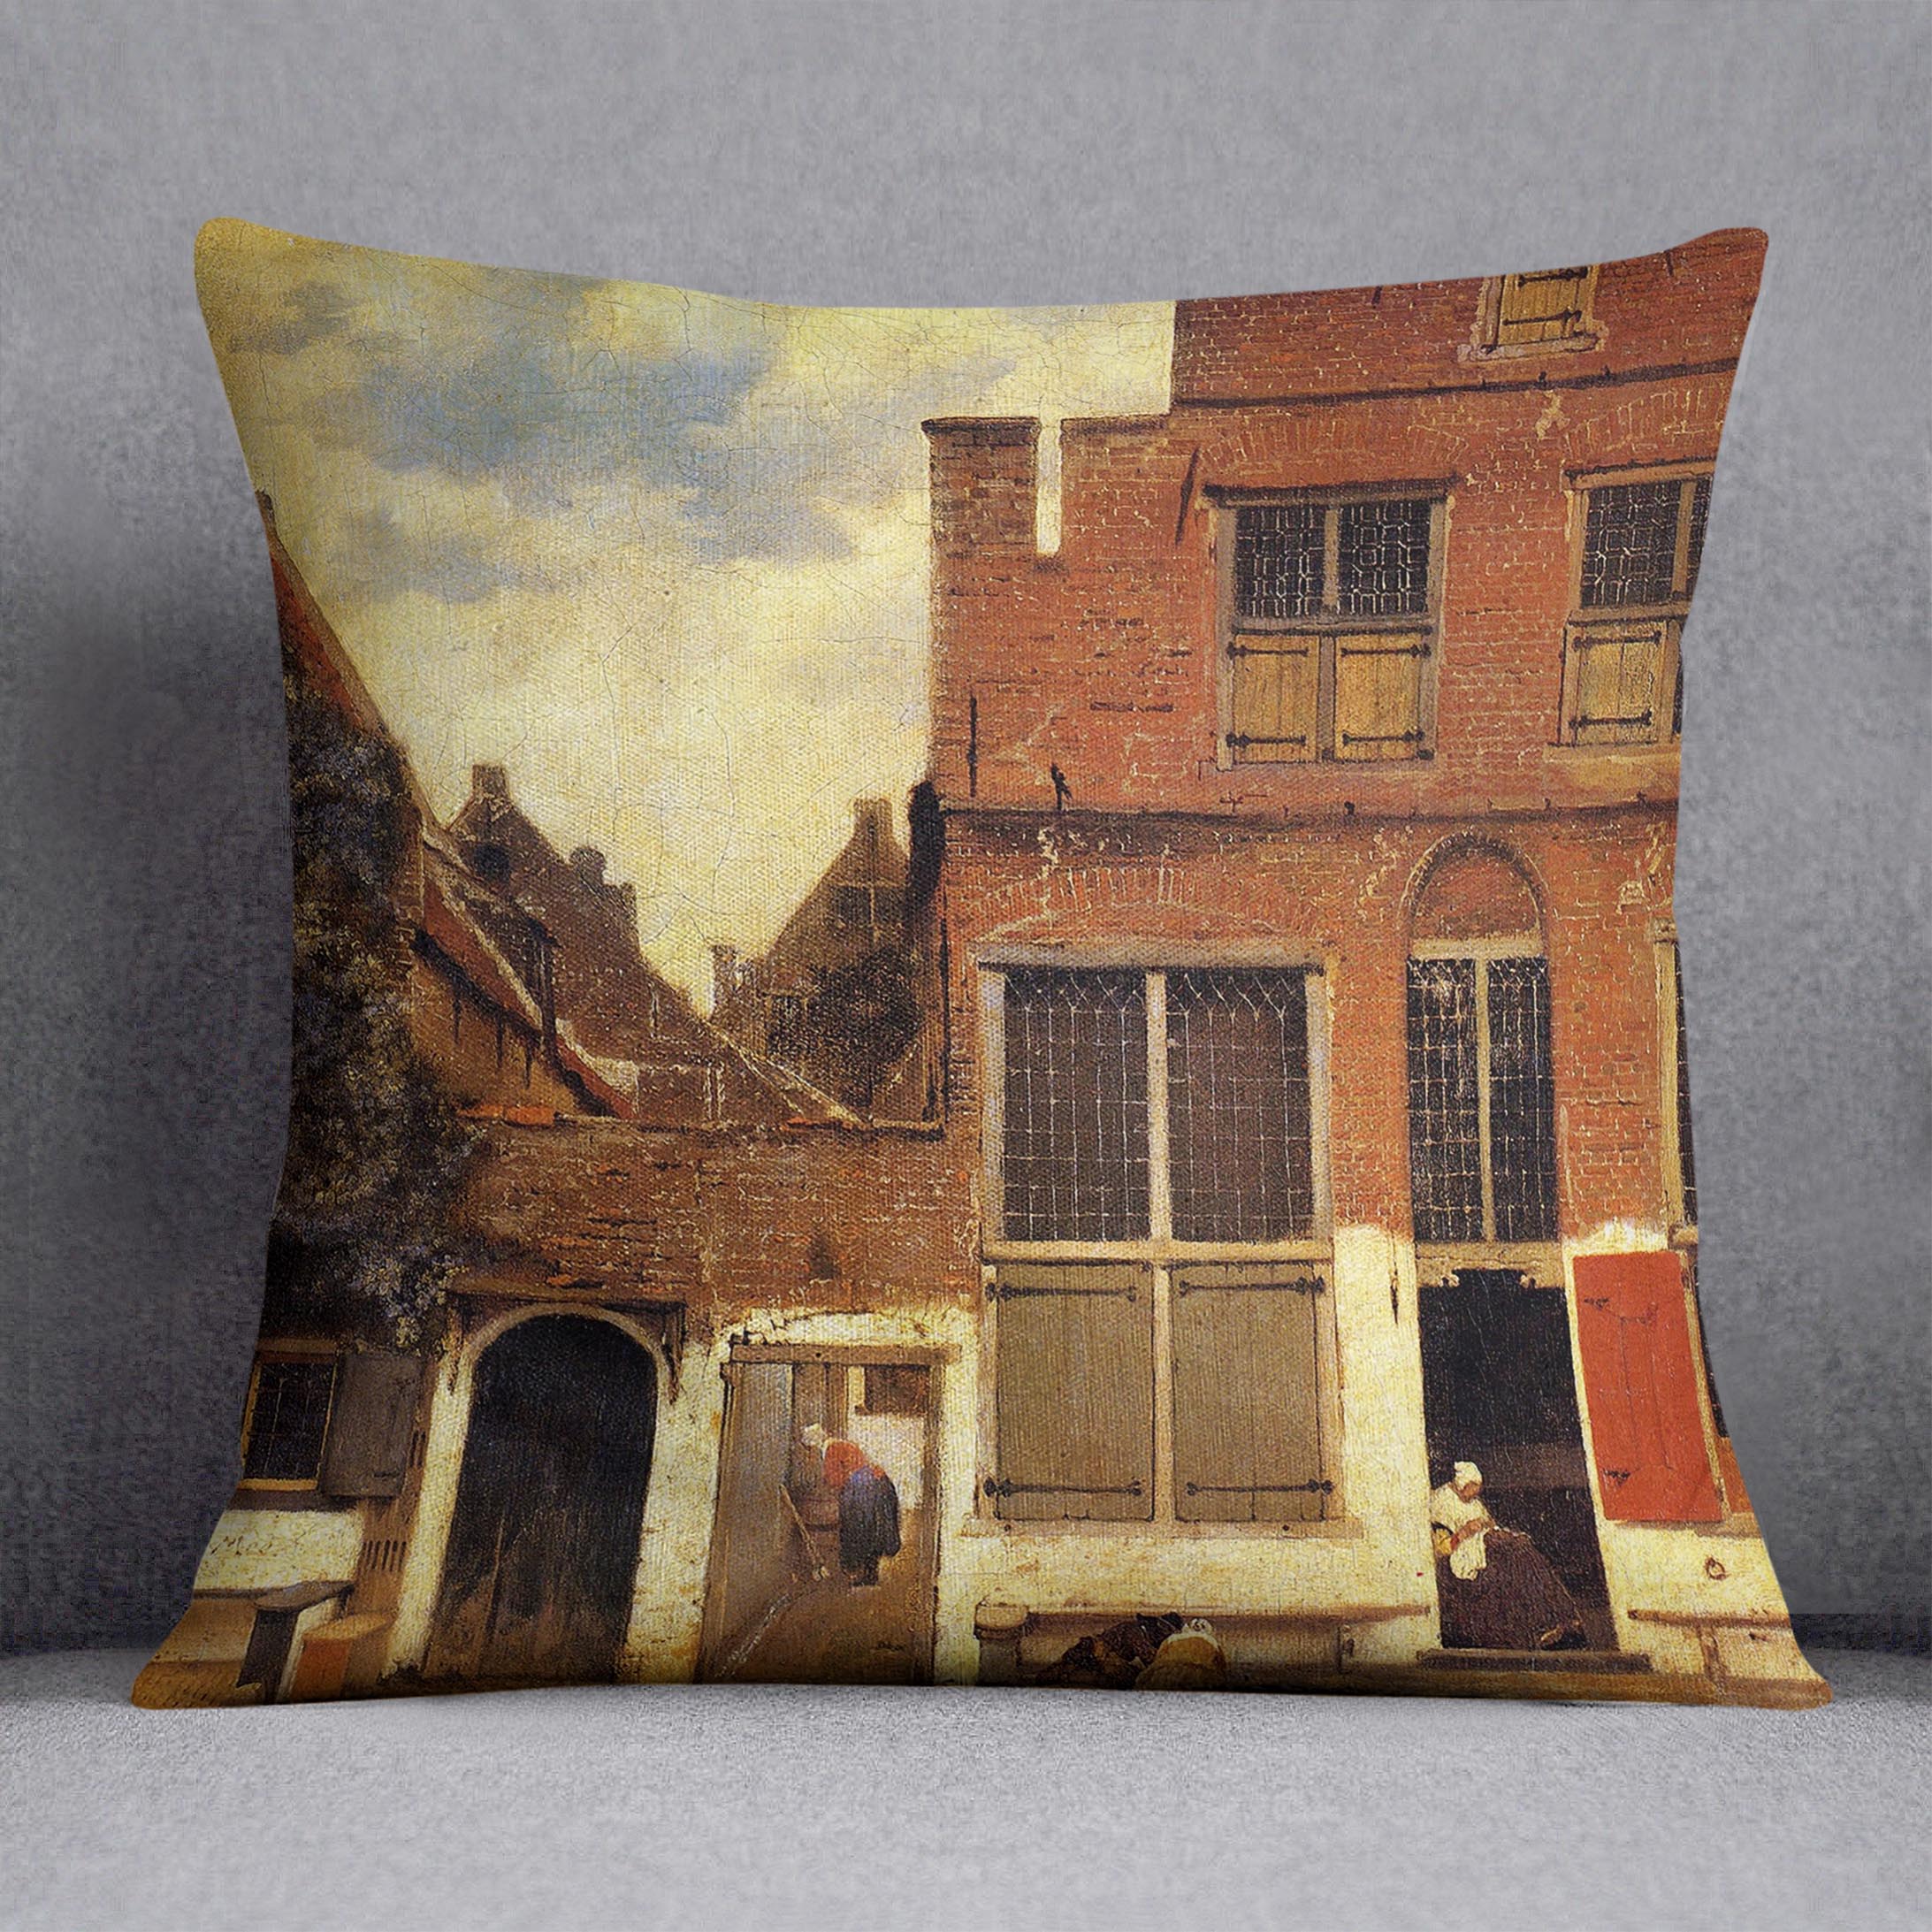 The little street by Vermeer Cushion